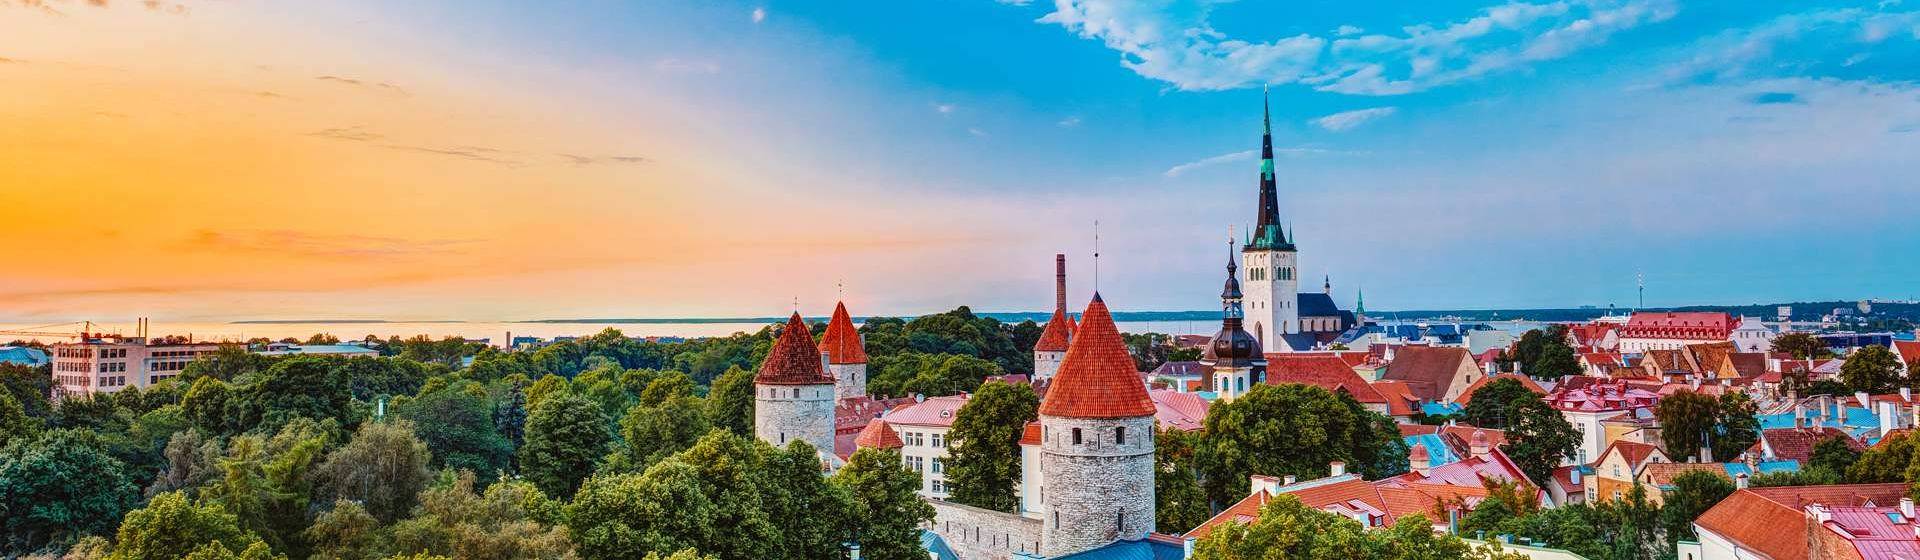 Holidays to Tallinn Image